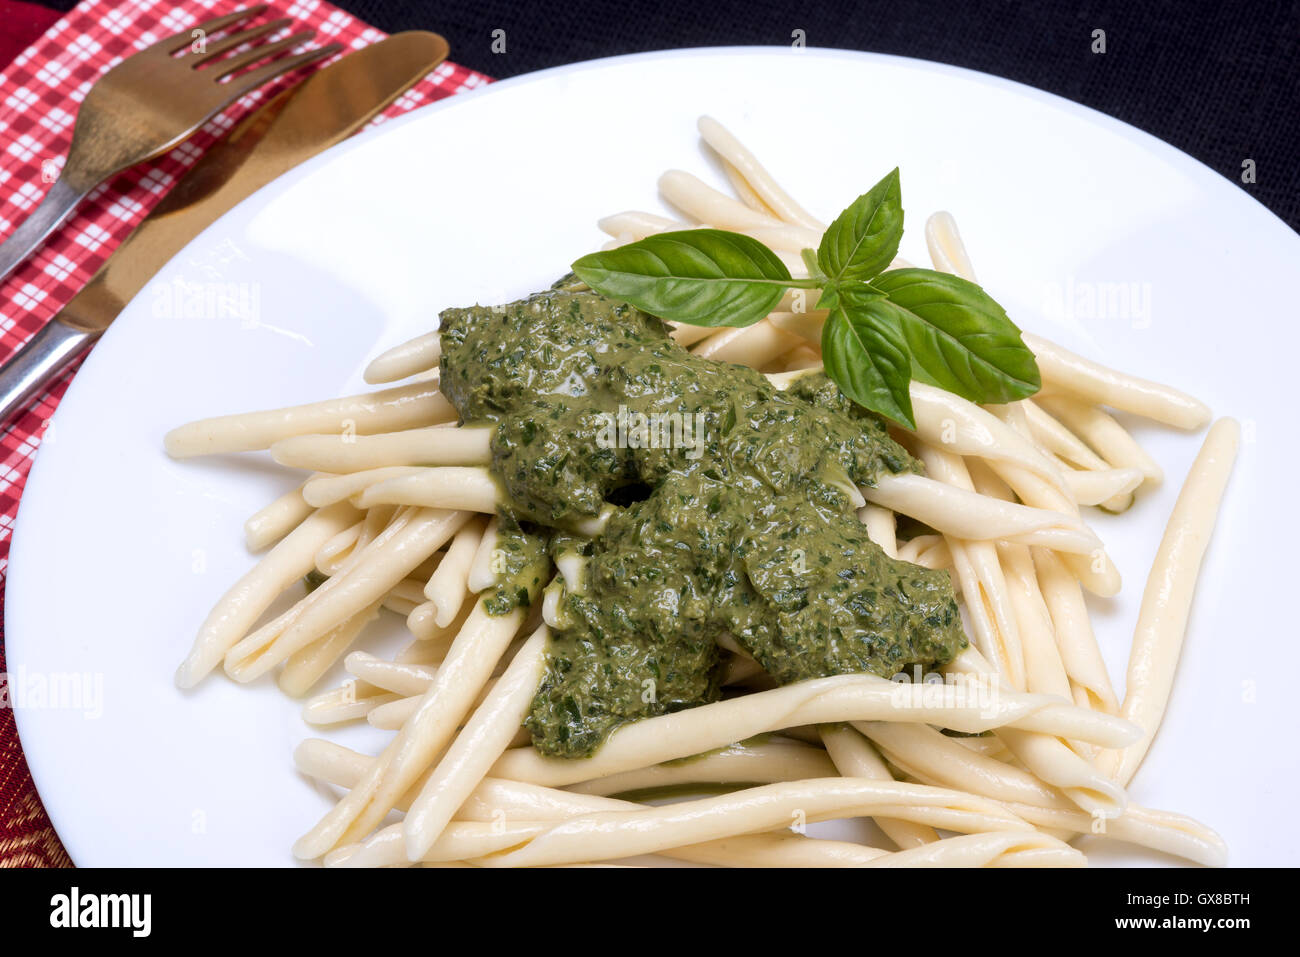 Traditional Italian pasta originating from region Liguria served with pesto sauce Stock Photo